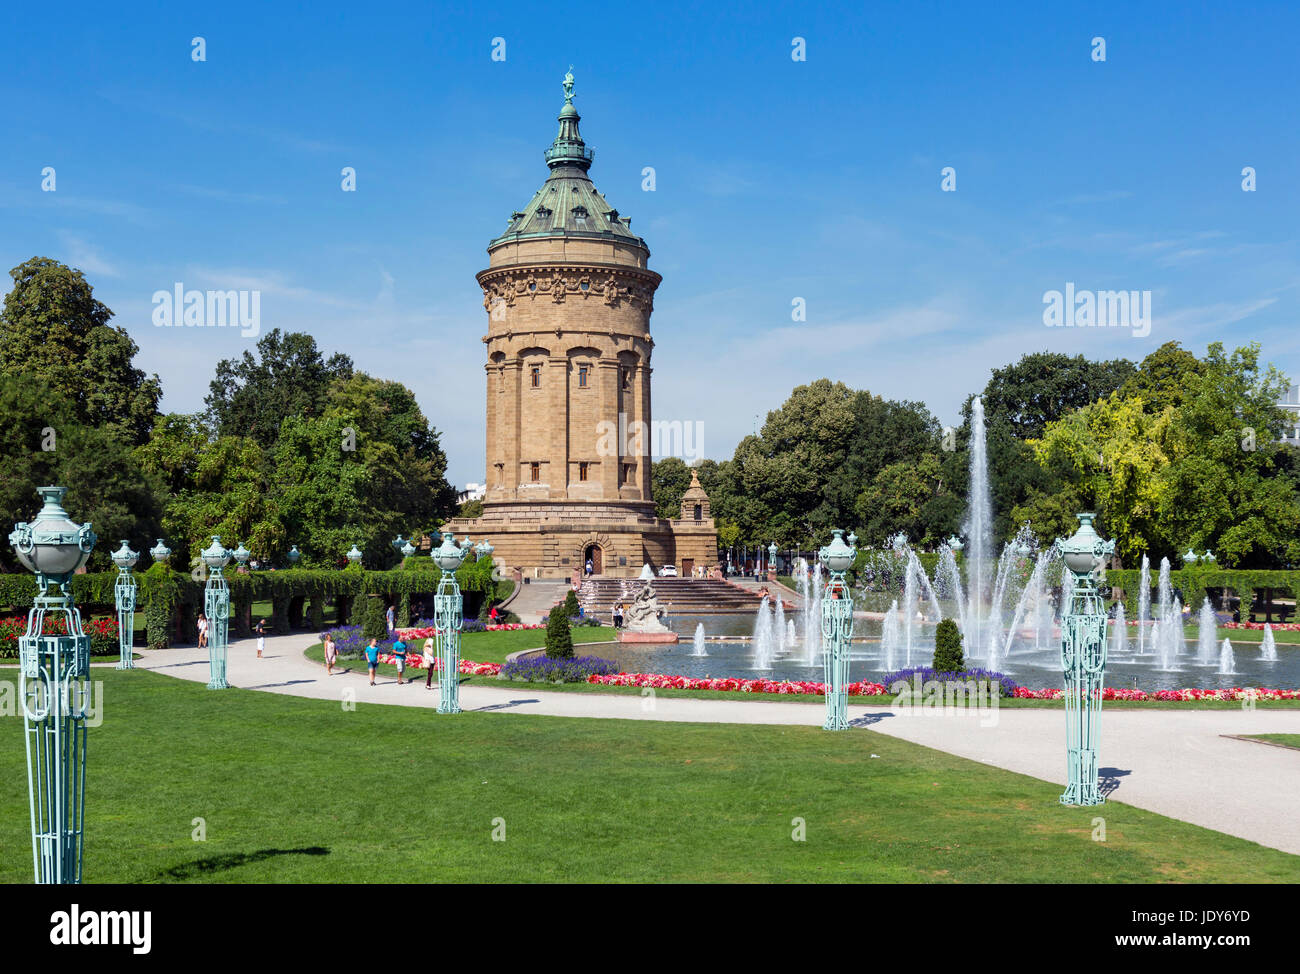 The Wasserturm (Water Tower), Friedrichsplatz, Mannheim, Baden-Württemberg, Germany Stock Photo